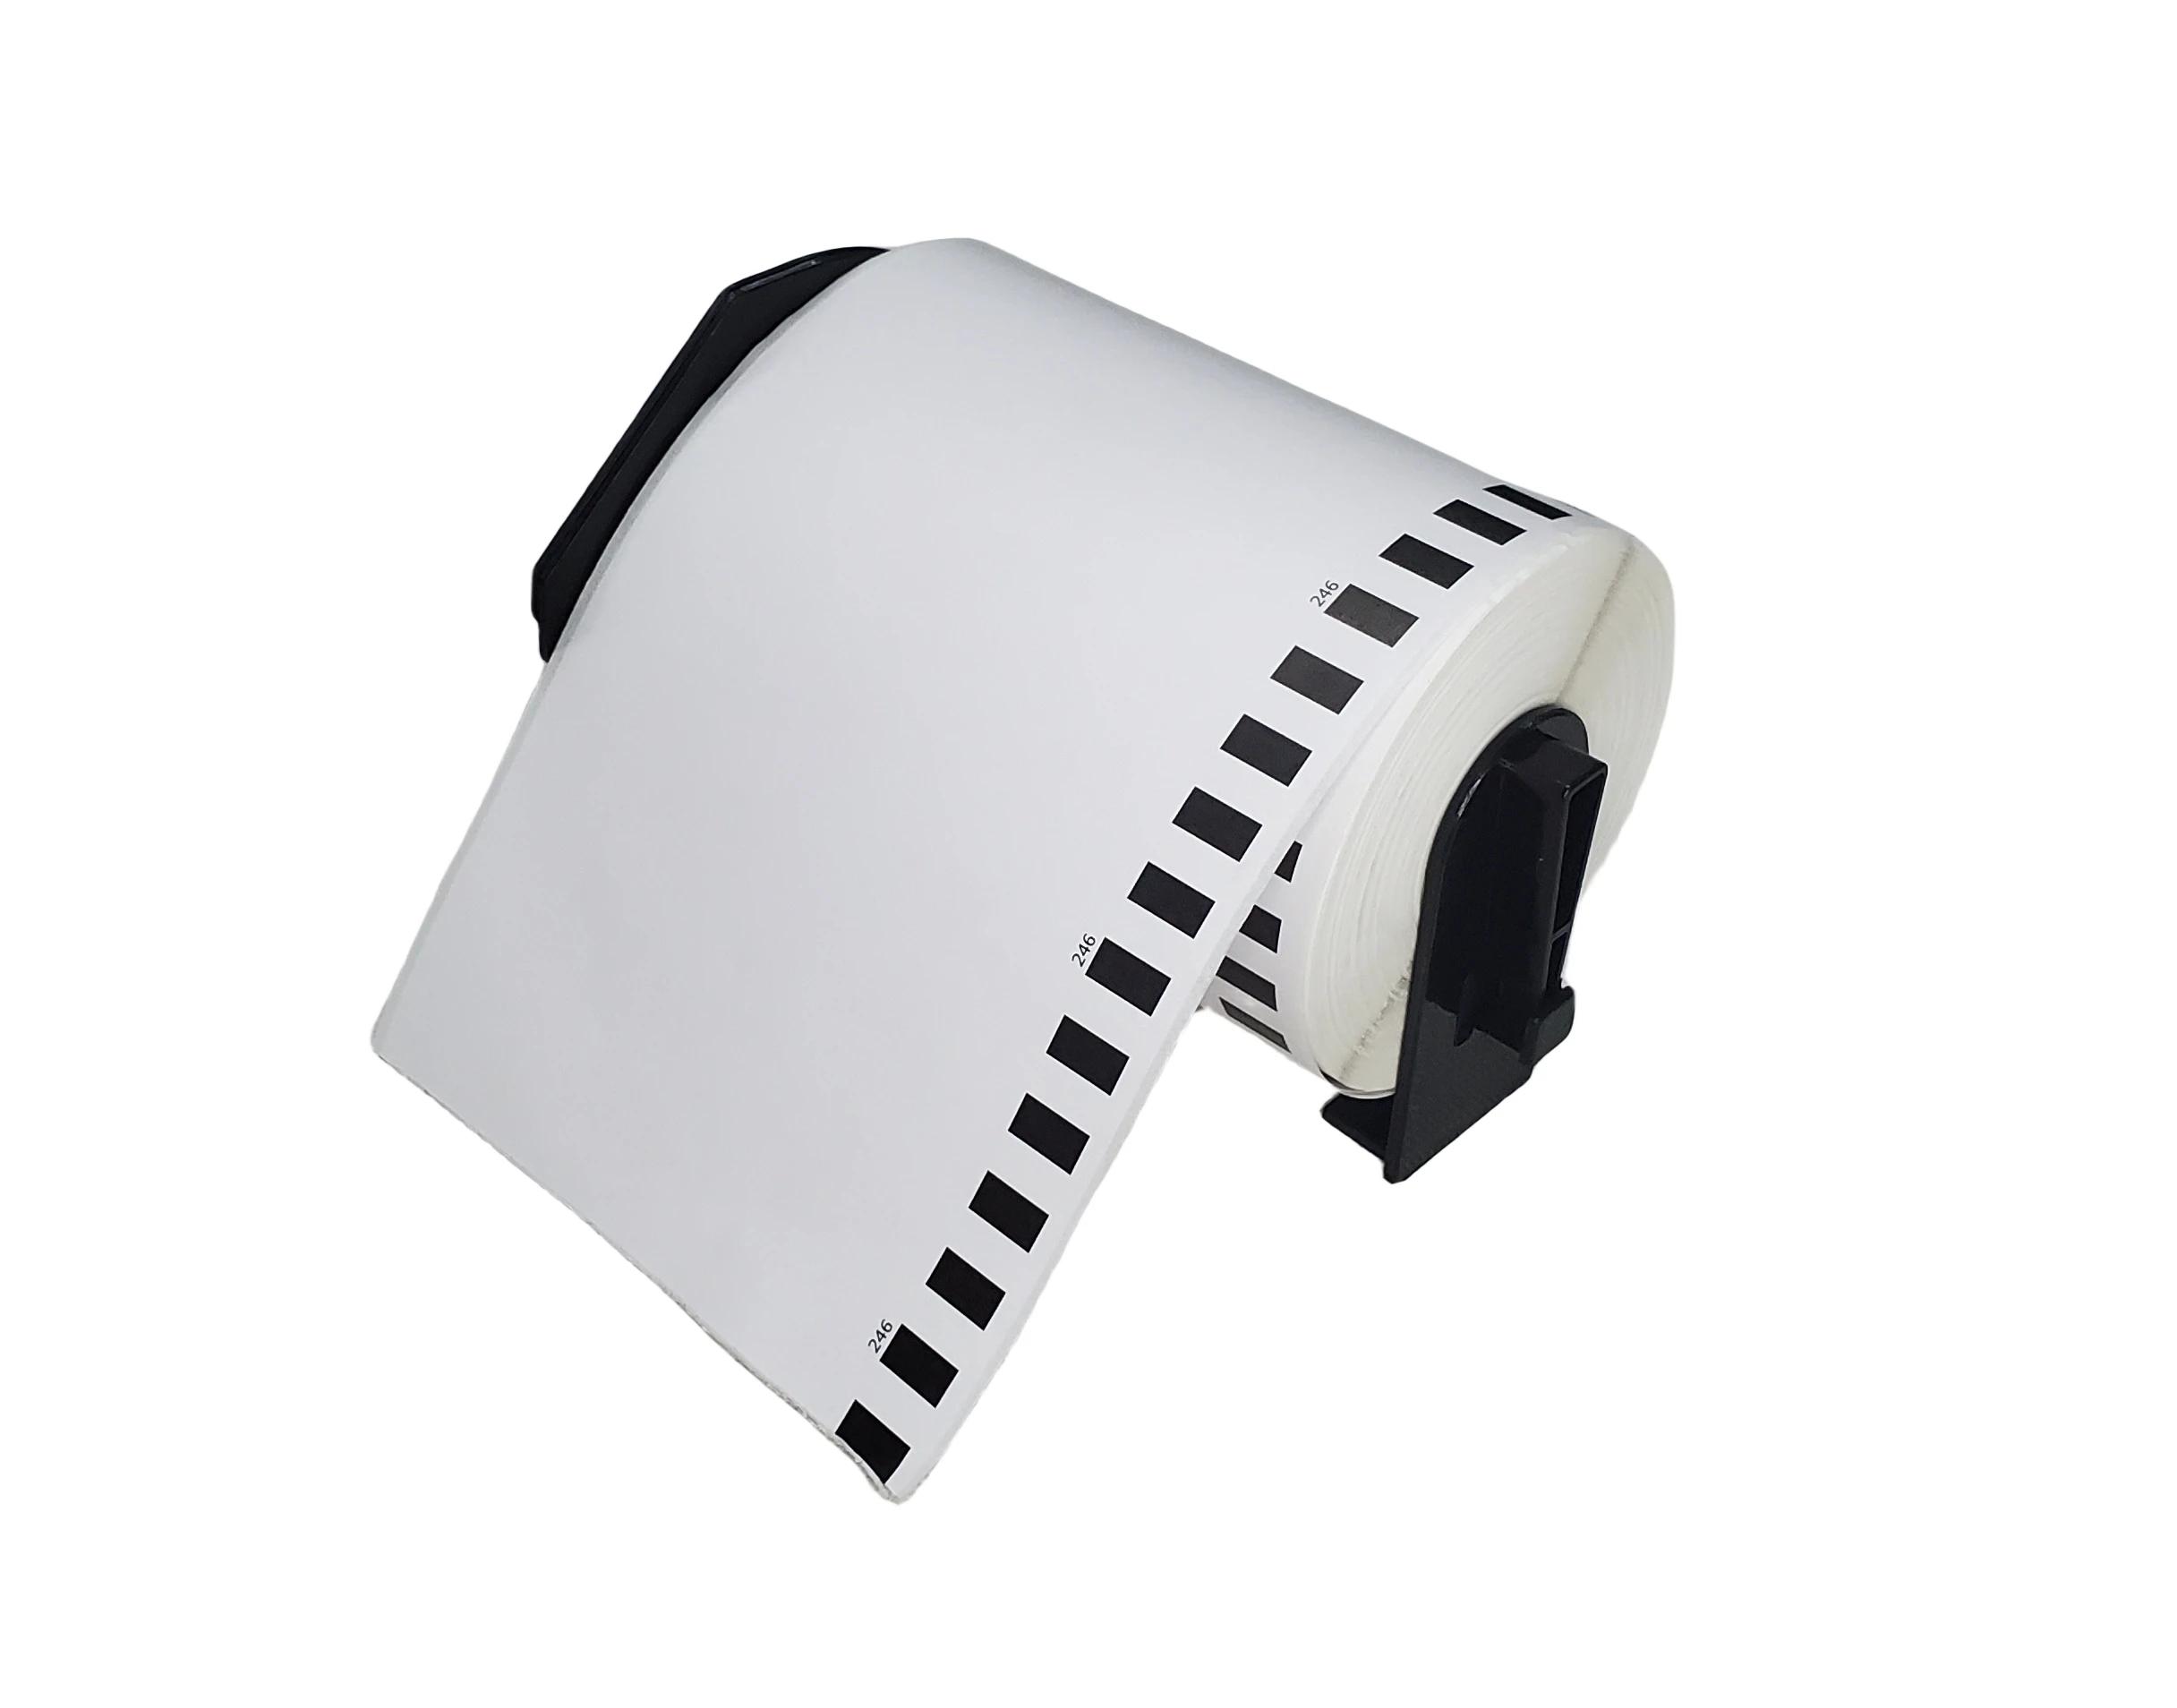 Makki съвместими етикети Brother DK-22246 - White Continuous Length Paper Tape 103mm x 30.48m, Black on White - MK-DK-22246